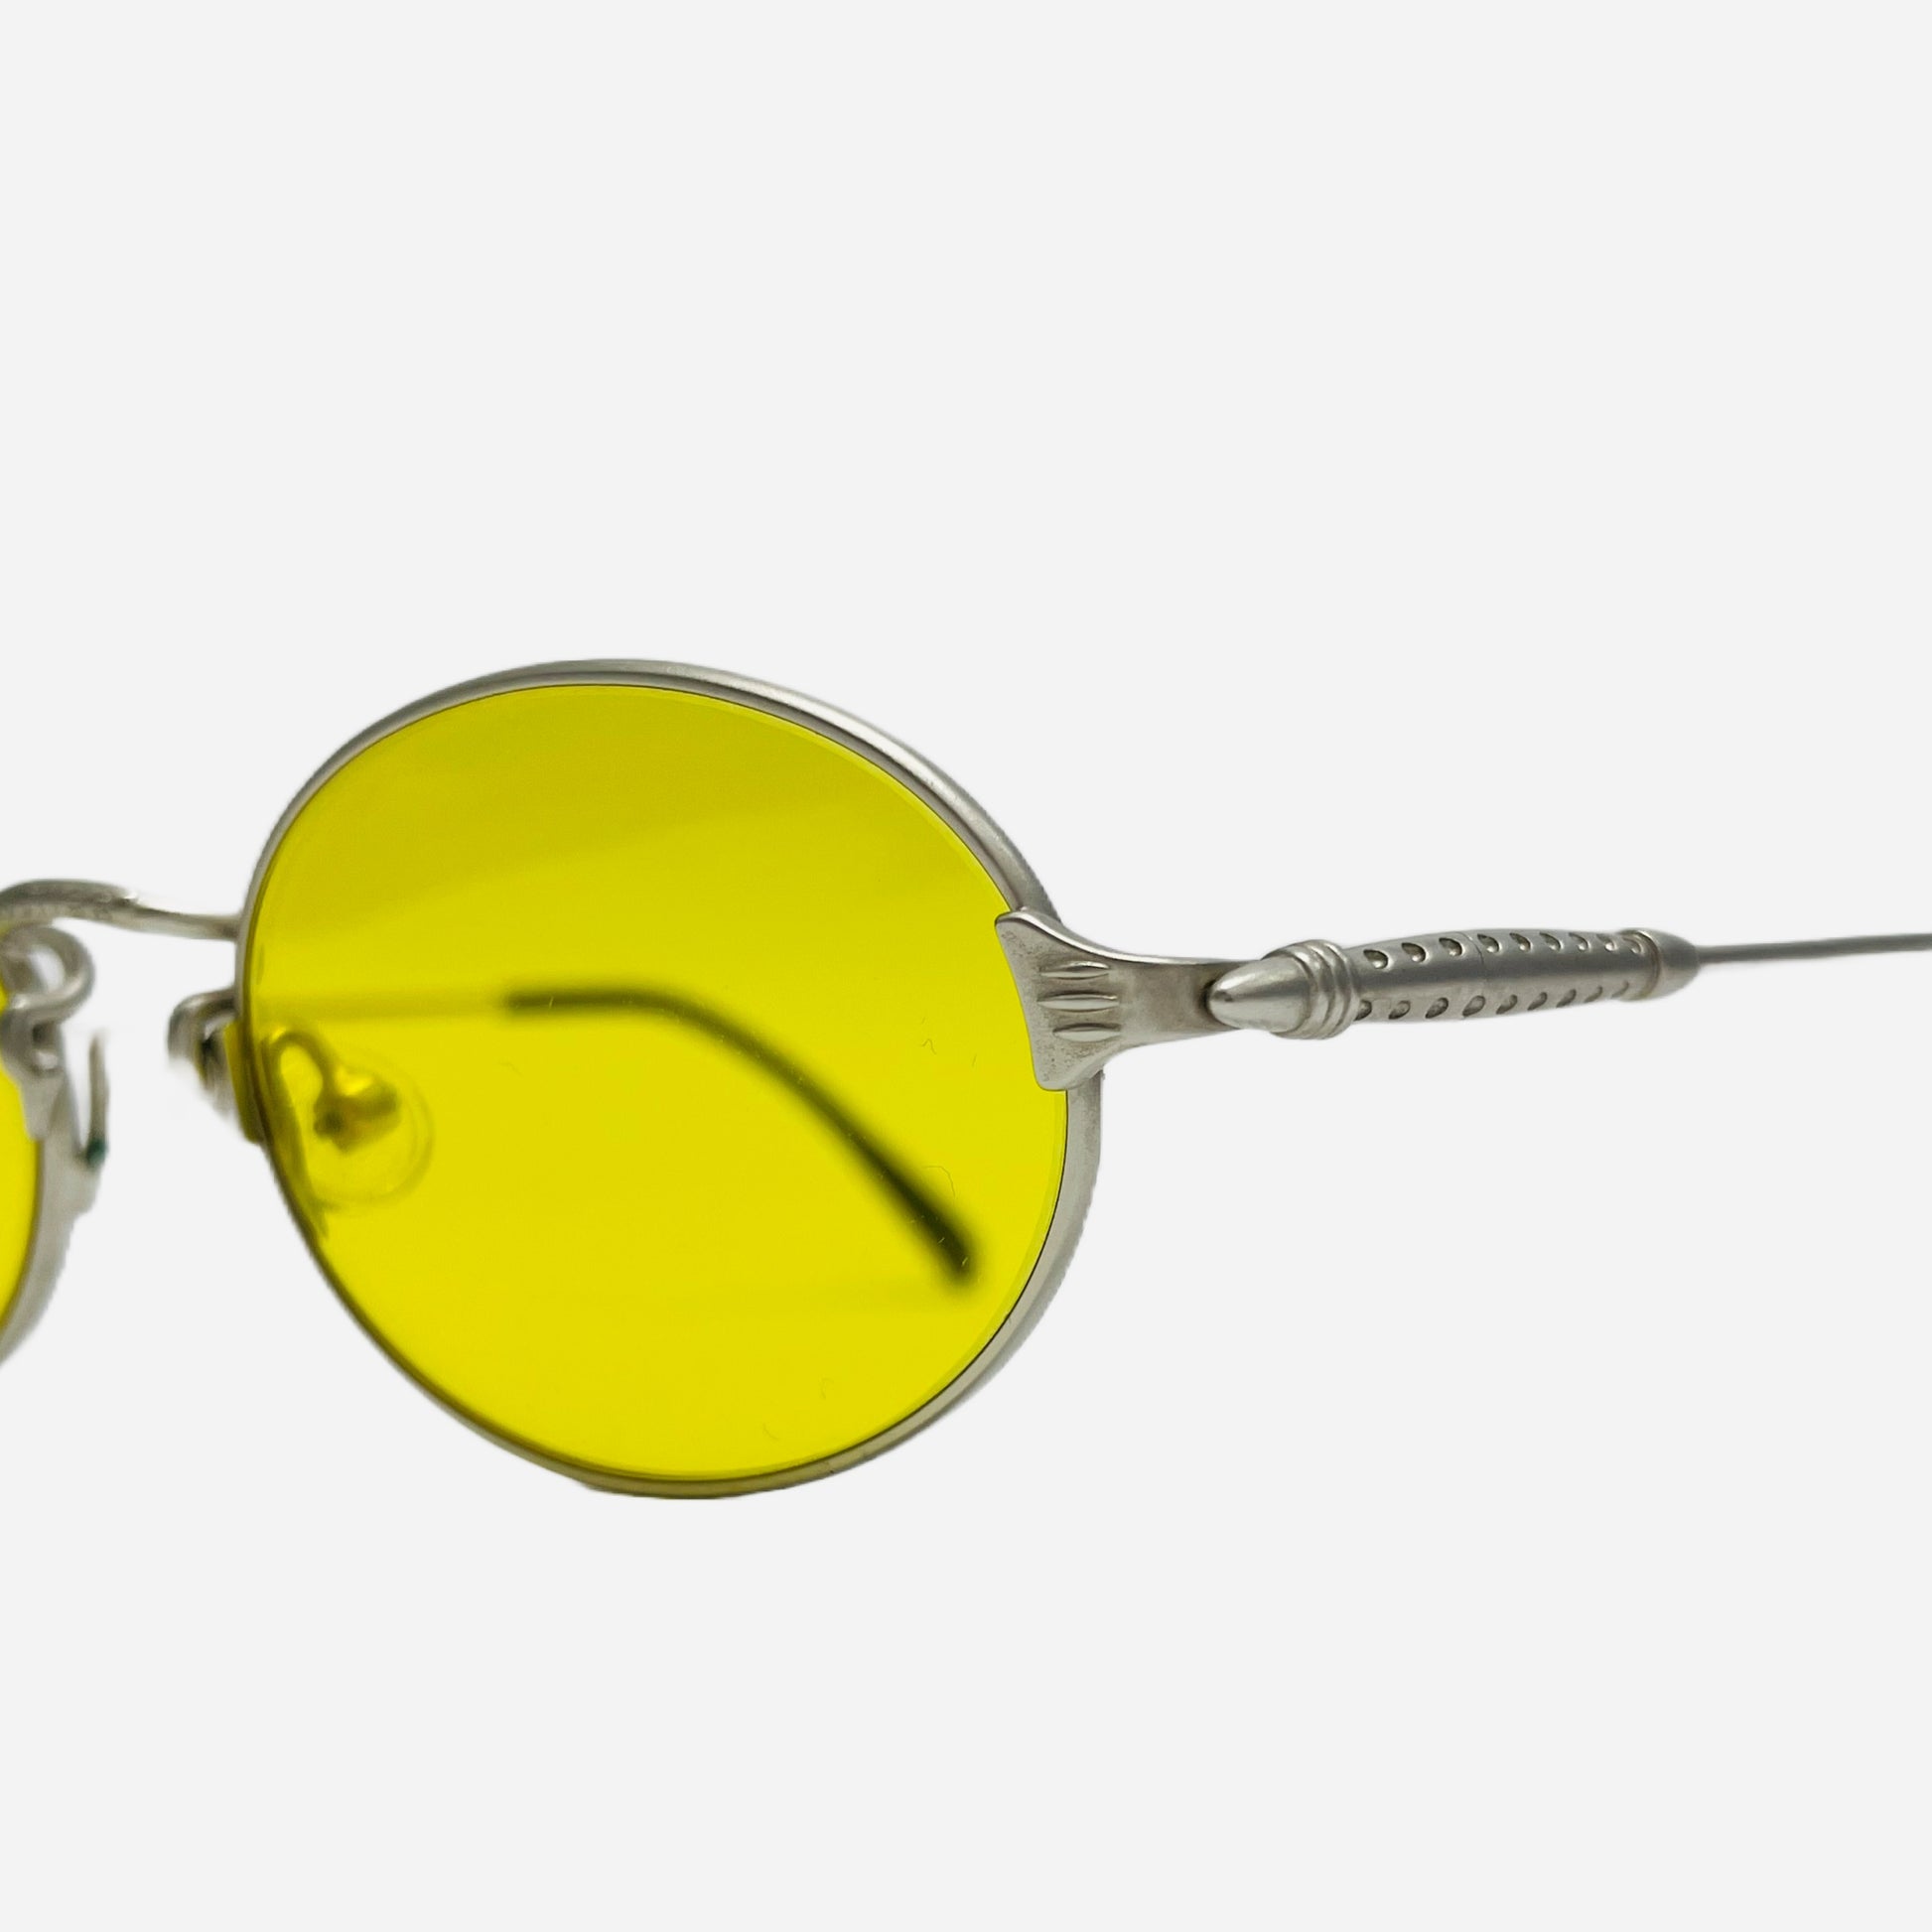 Vintage-Jean-Paul-Gaultier-Sonnenbrille-Sunglasses-Model-55-6108-made-in-japan-the-seekers-side-detail-jpg